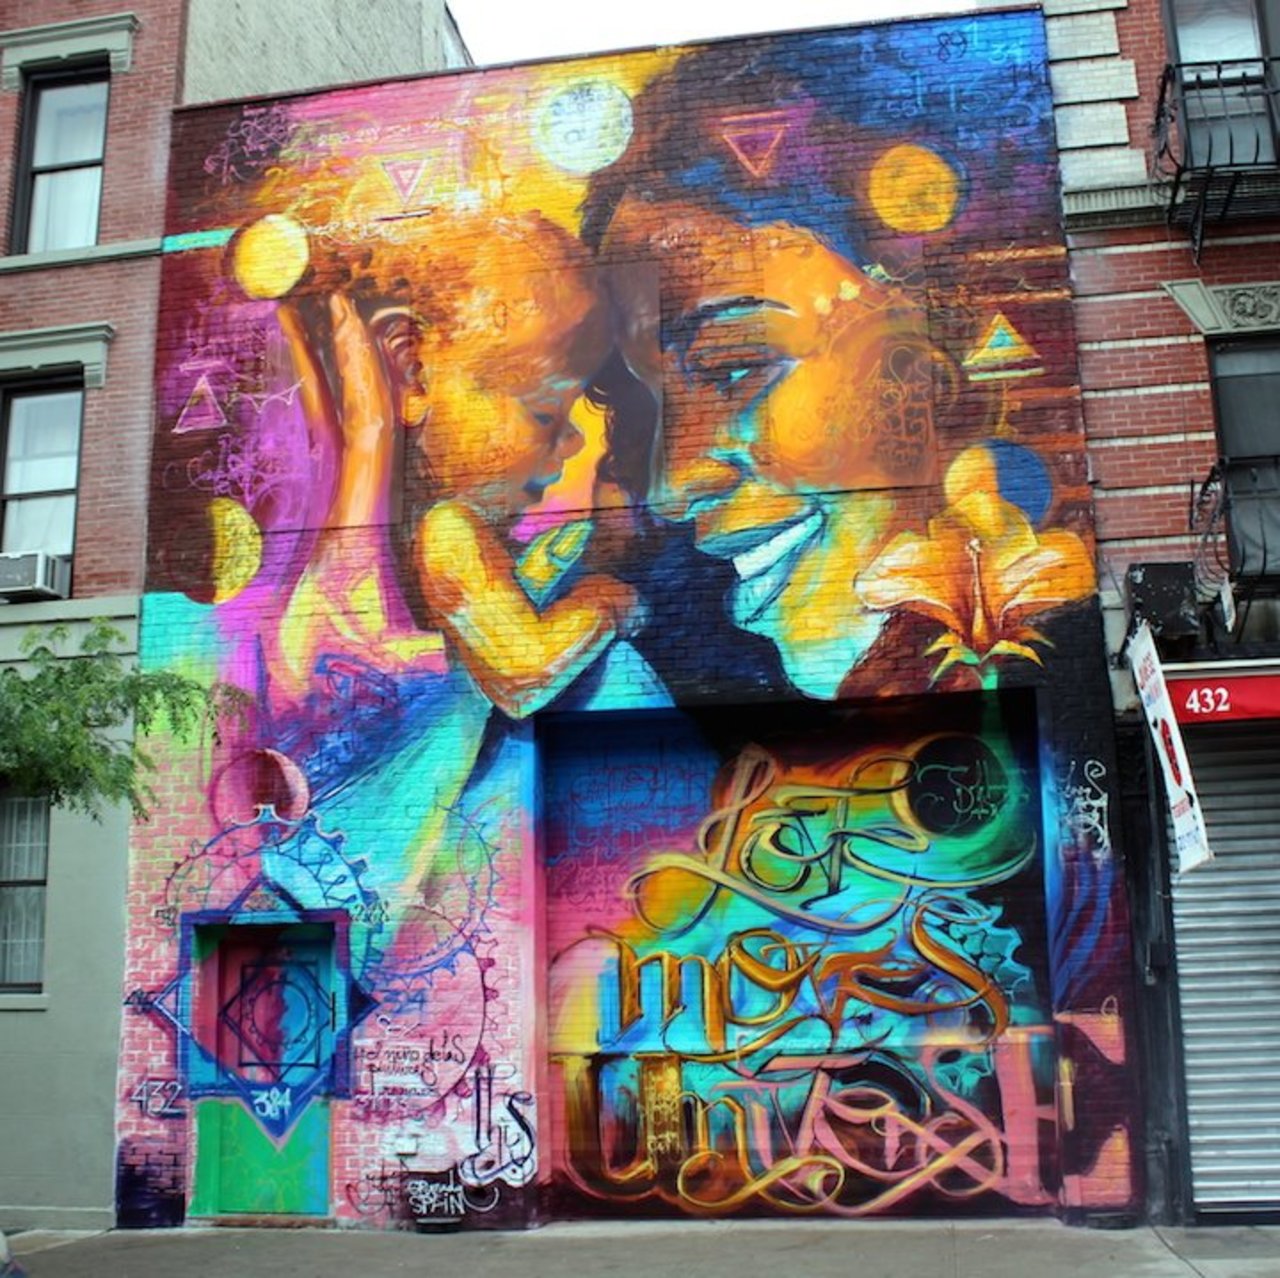 ... like the mother's love. Art by El Niño de las Pinturas in New York City #StreetArt #Art #Mothers #Love #Graffiti #Mural #UrbanArt #NewYorkCity https://t.co/3U3g5EzZ4d